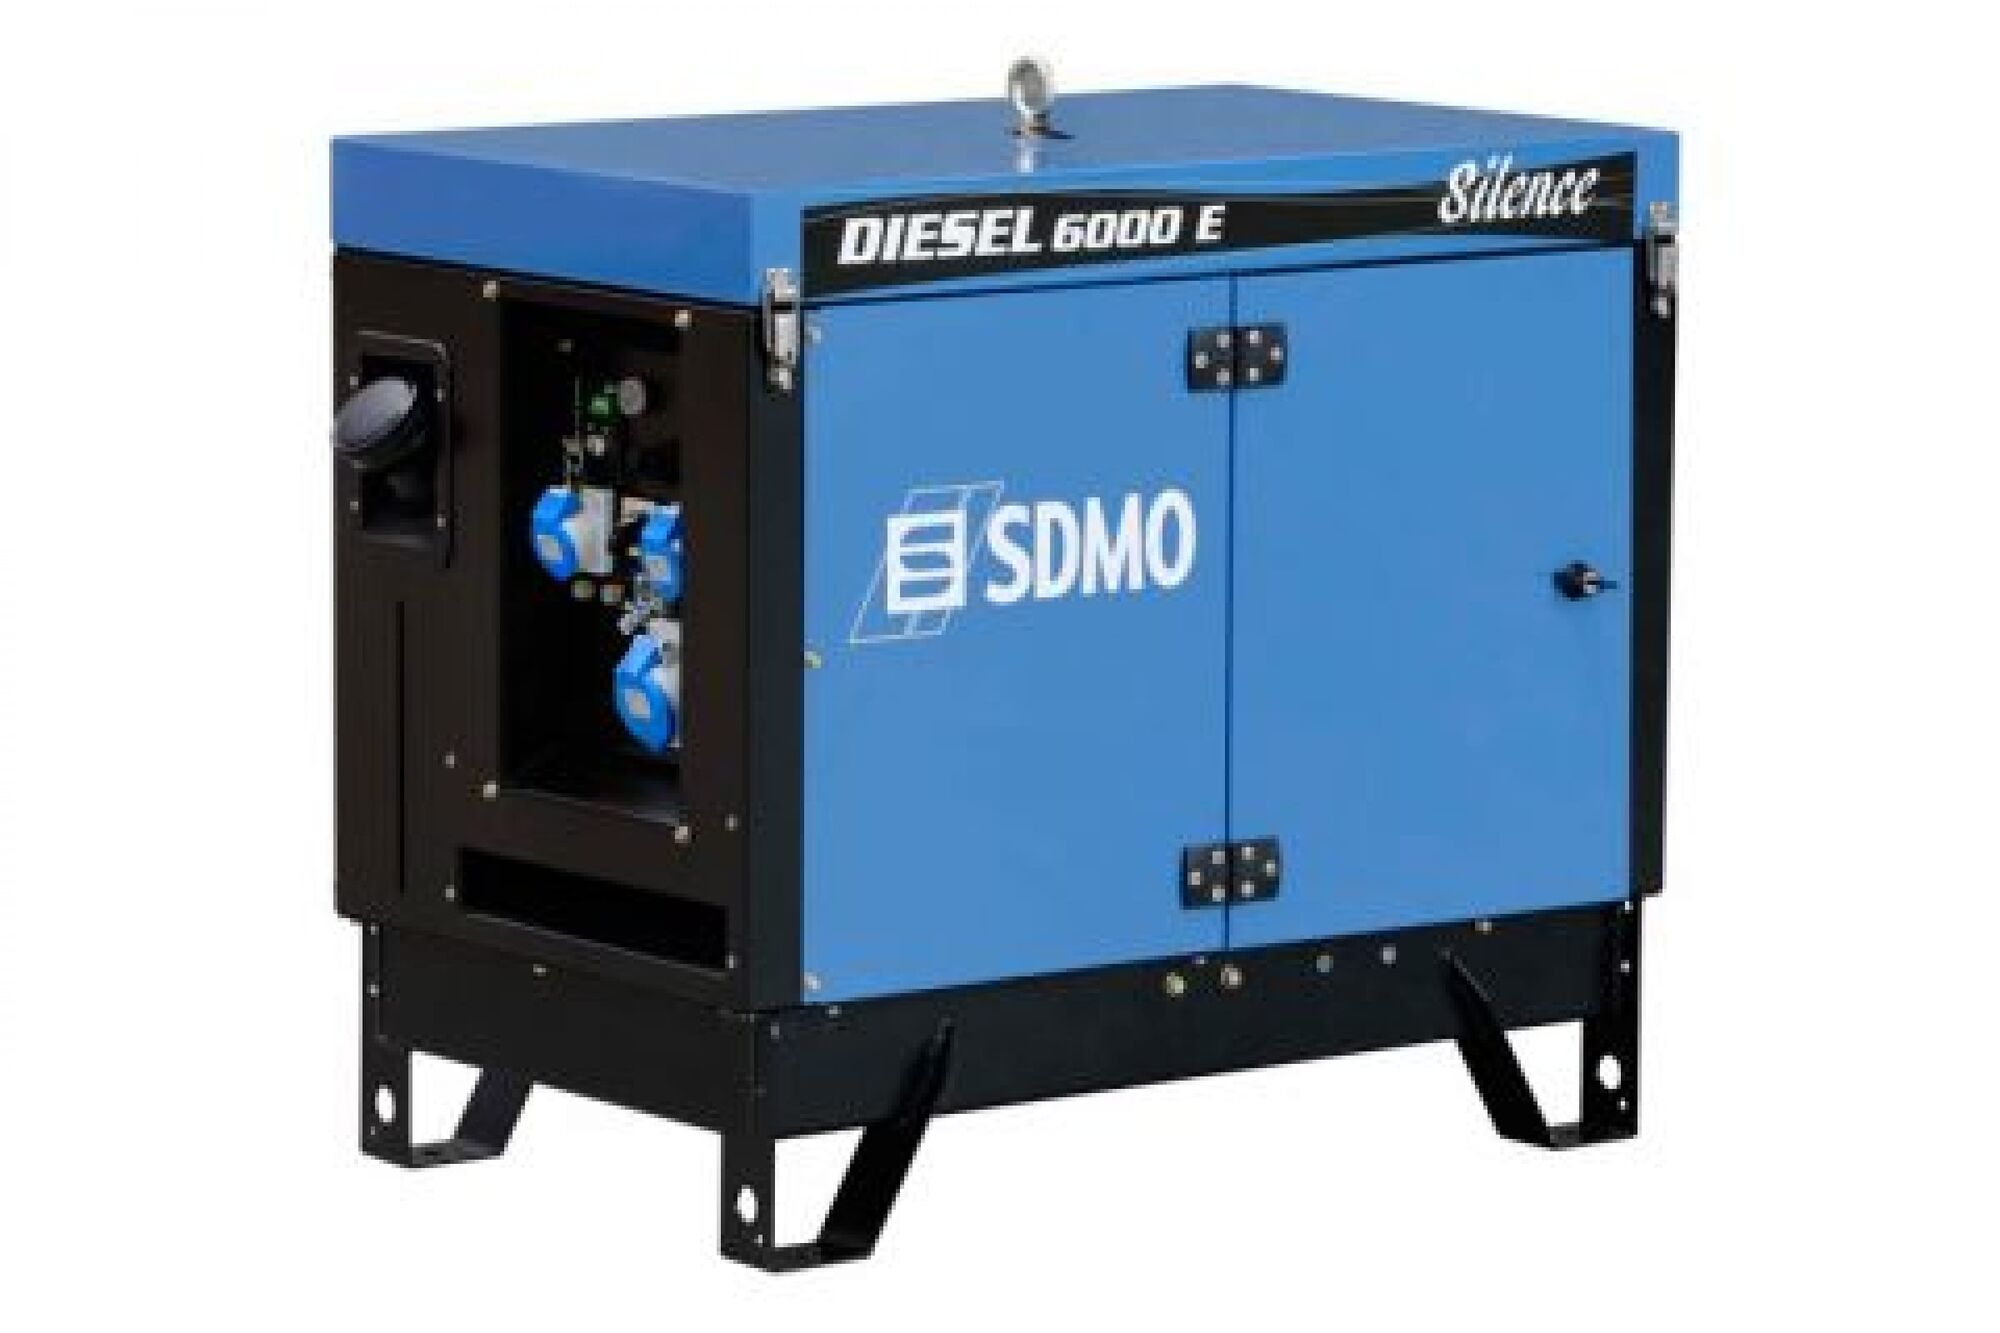 Дизельный генератор KOHLER-SDMO Diesel 6000 E Silence 4.9 кВт, 220 В 10093309